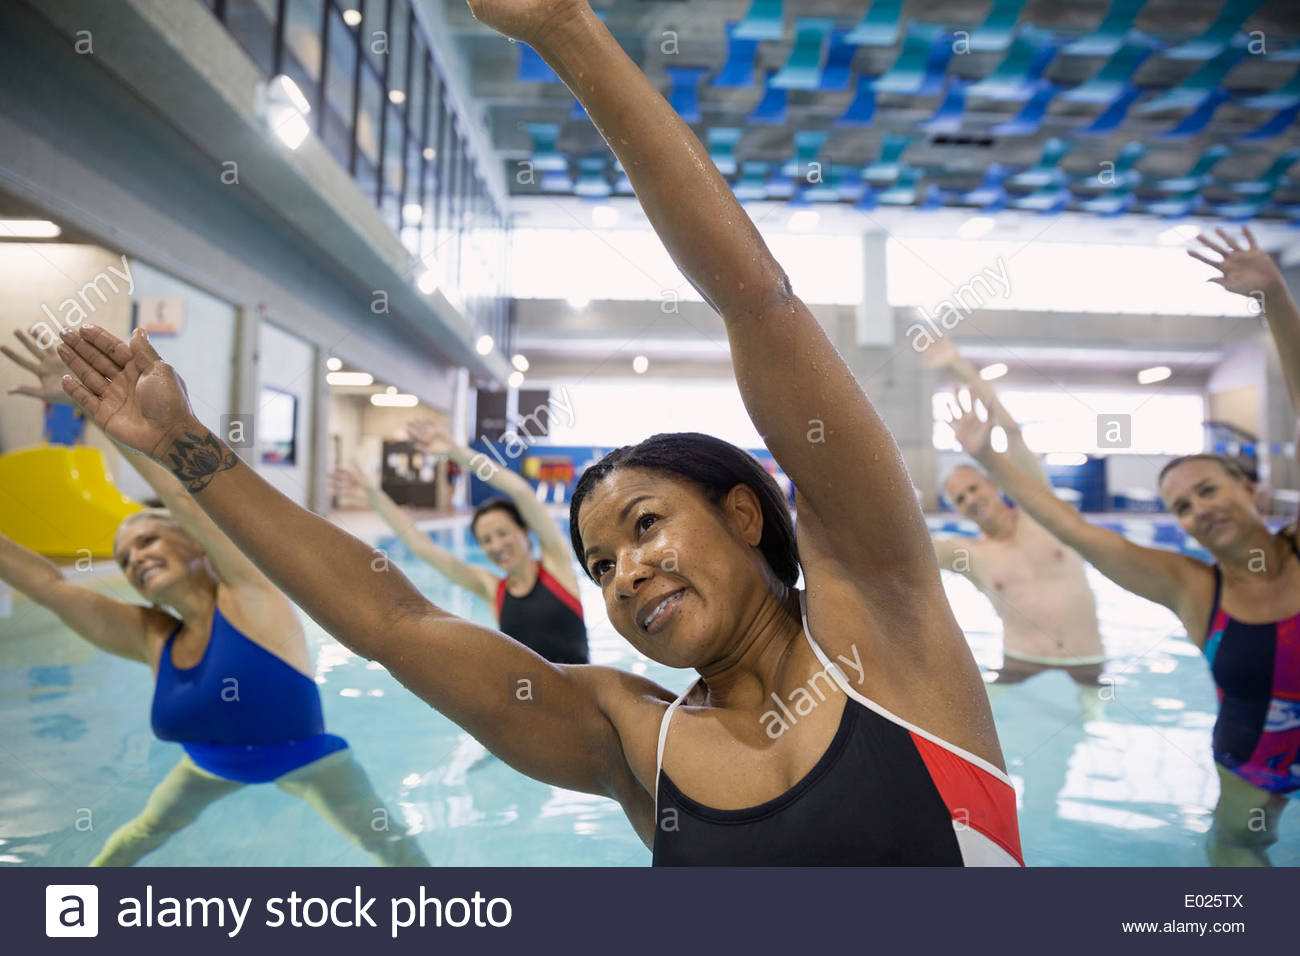 Water aerobics class at indoor swimming pool Stock Photo